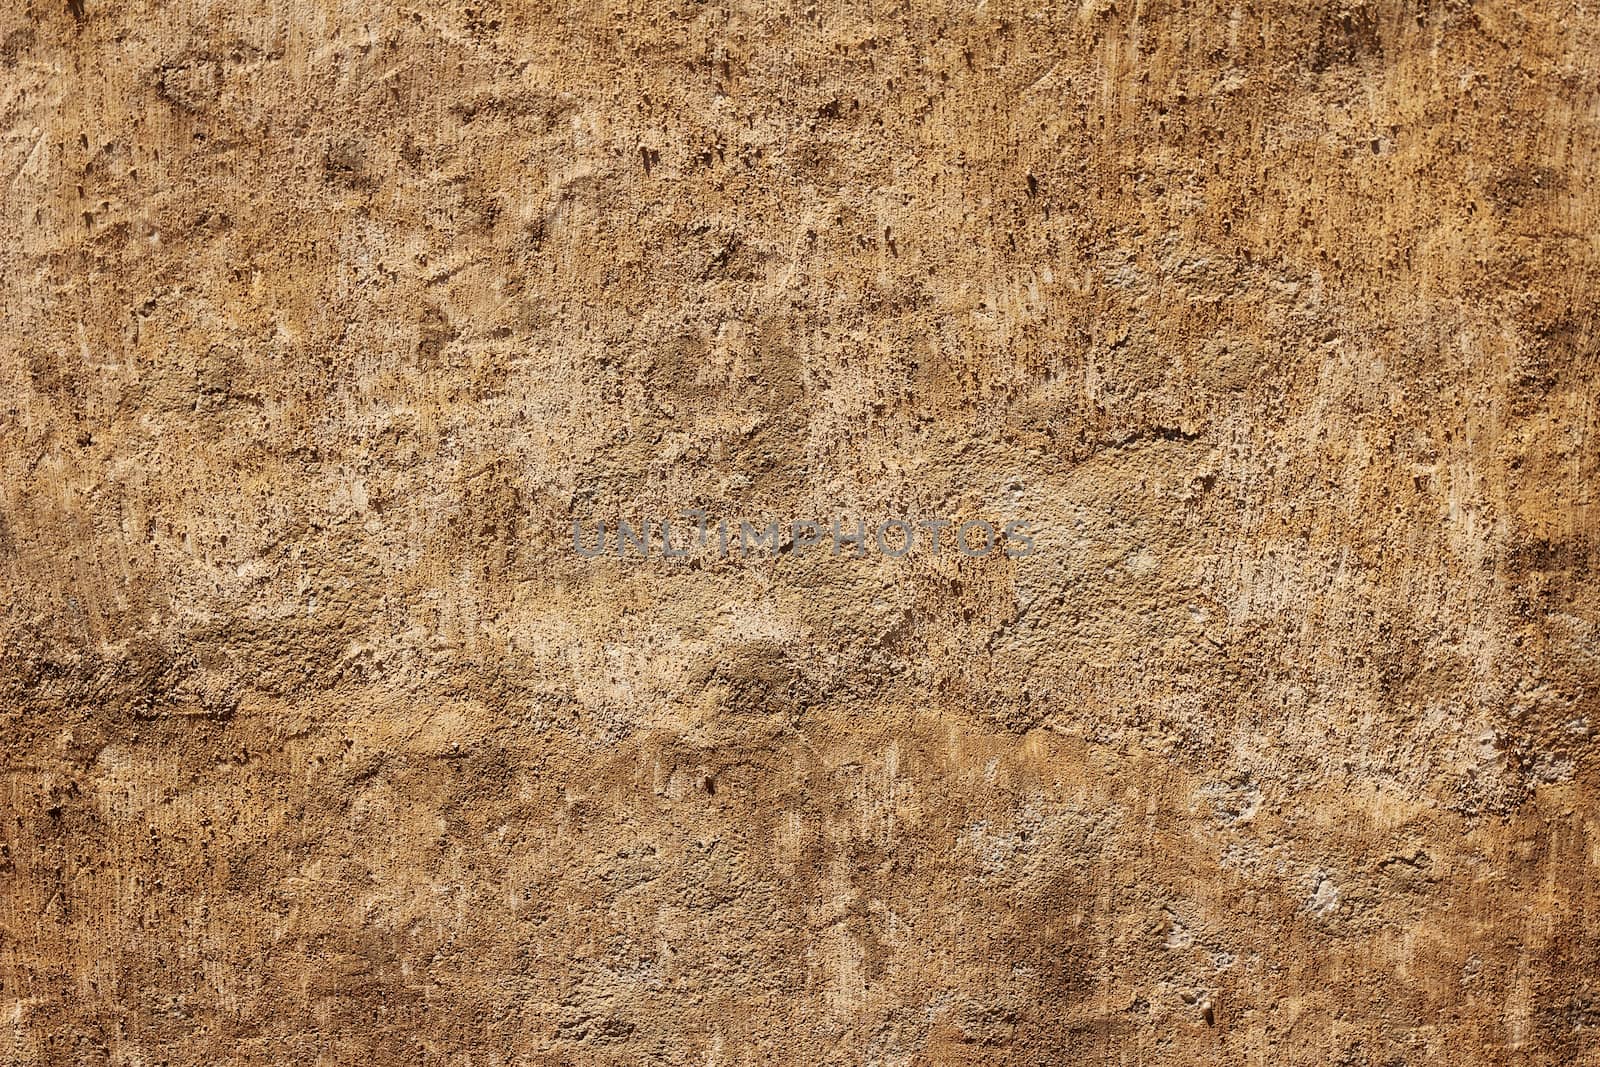 Rough plaster wall background by anterovium